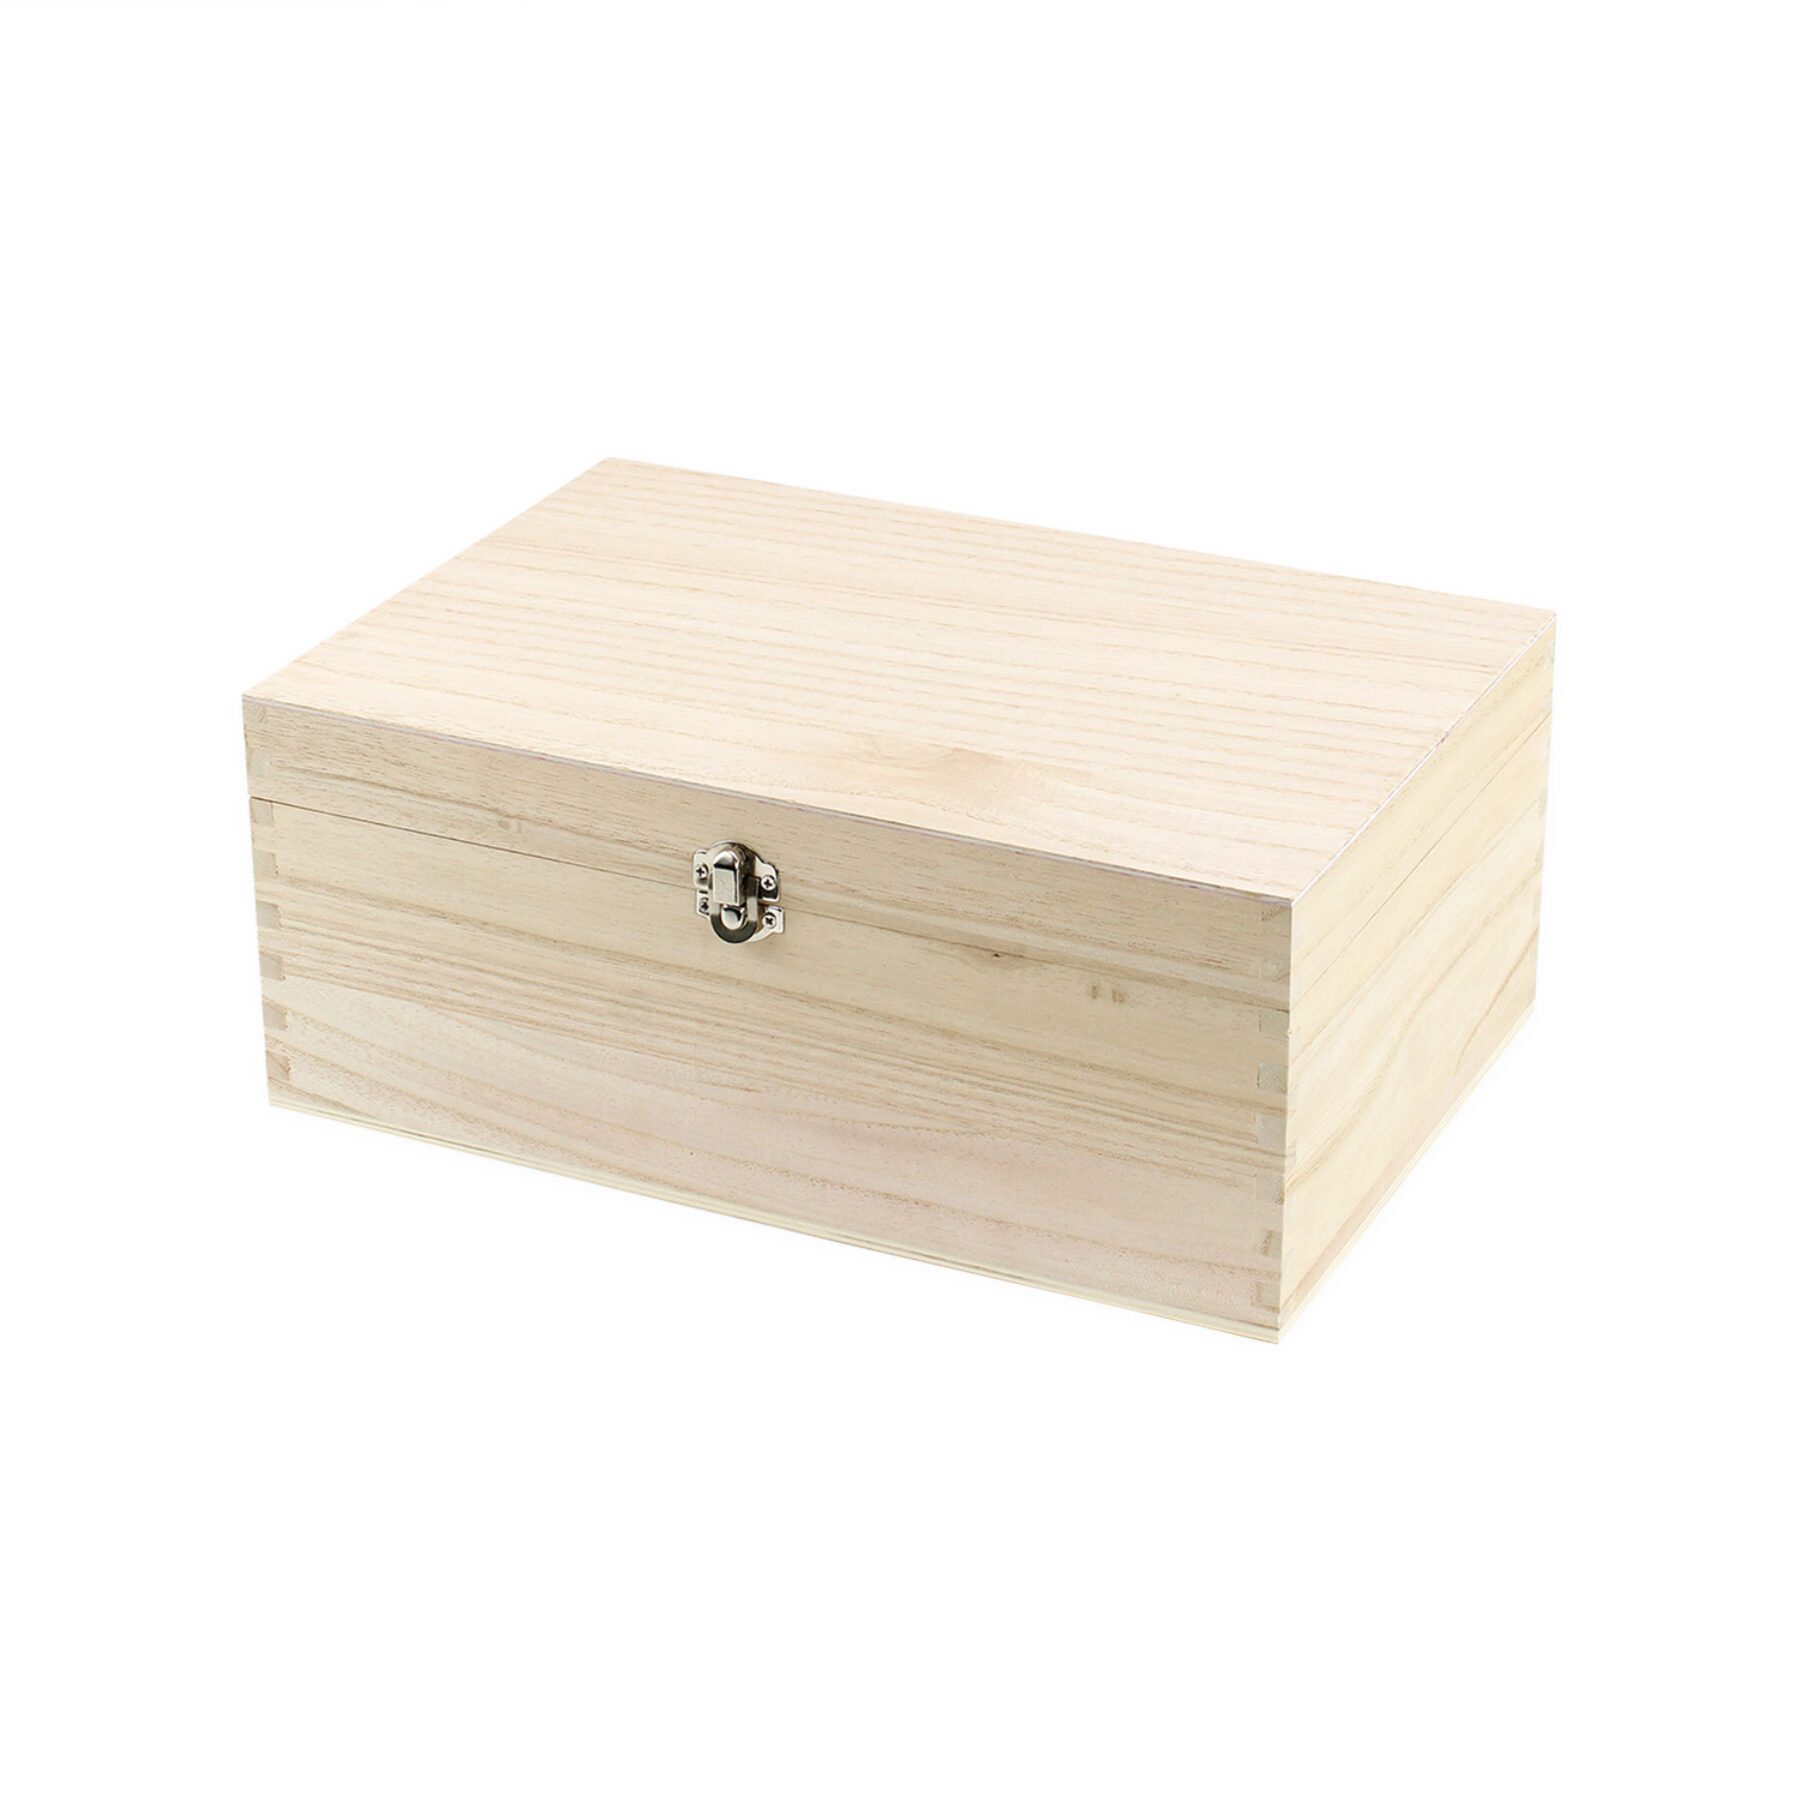 14 Inch Wooden Box Hamper